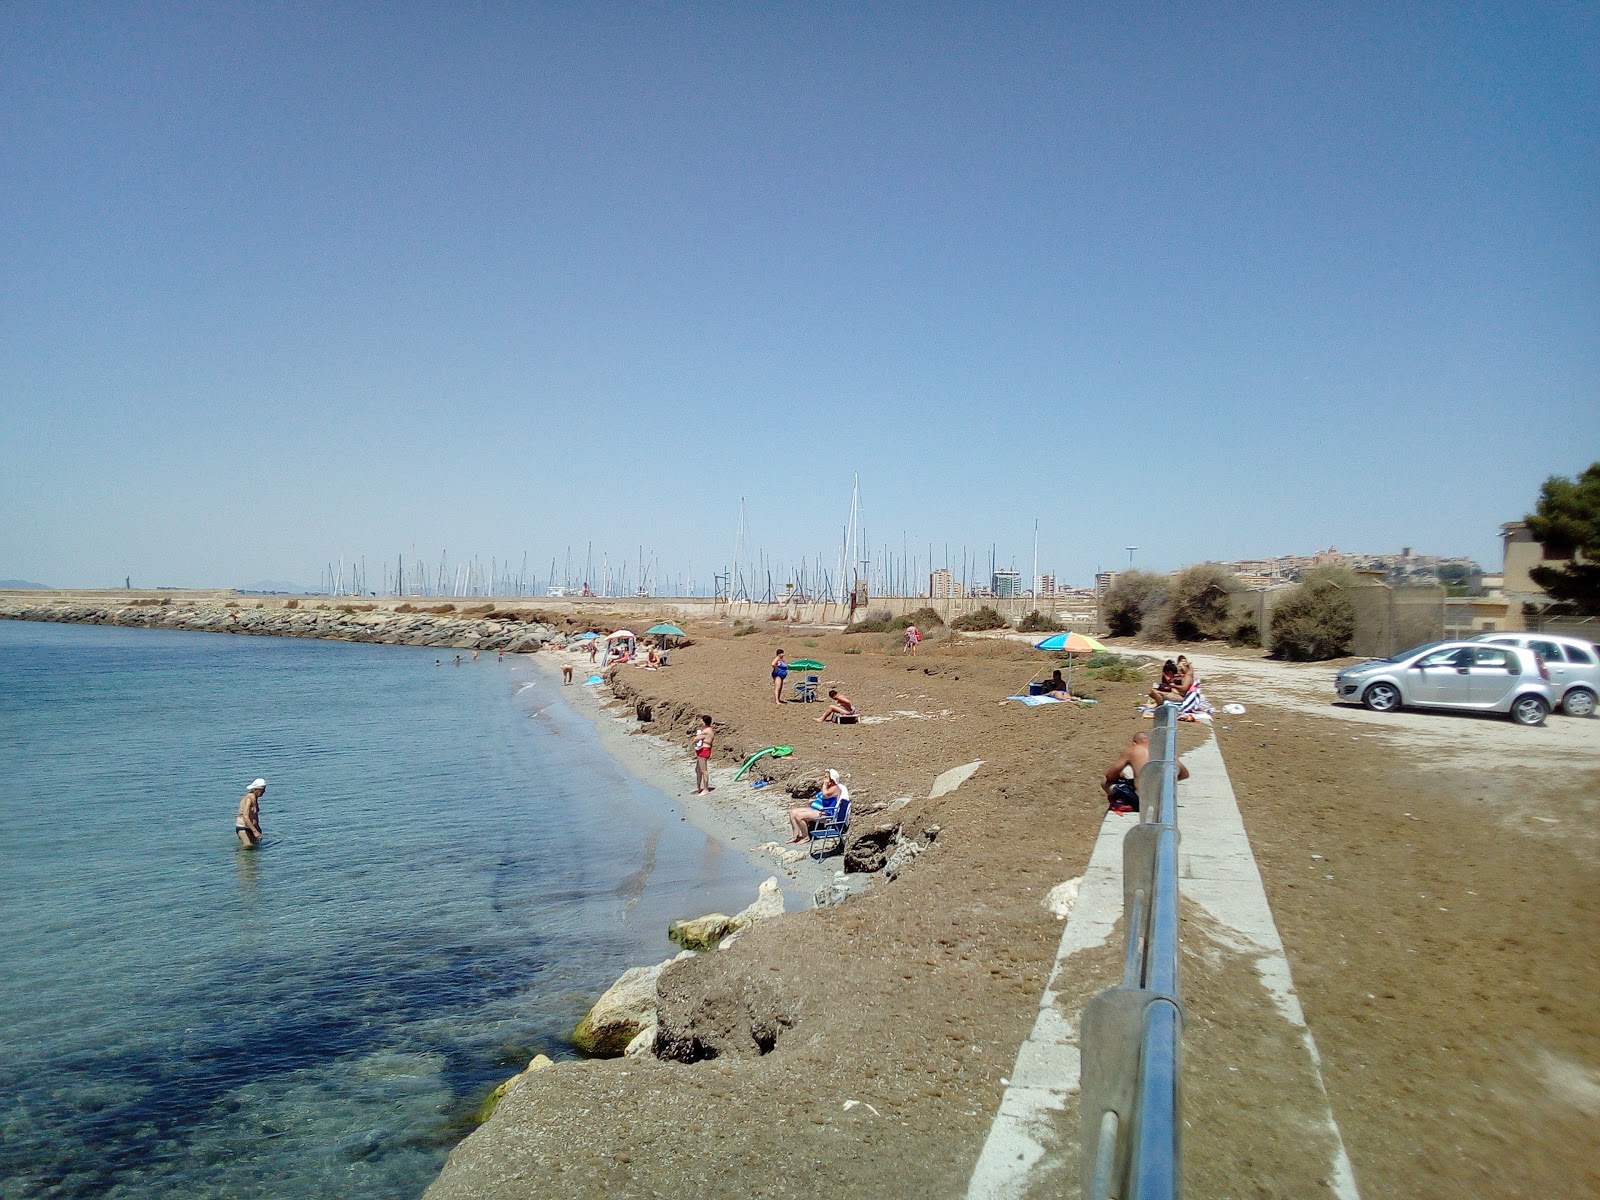 Spiaggia della Diga'in fotoğrafı doğrudan plaj ile birlikte